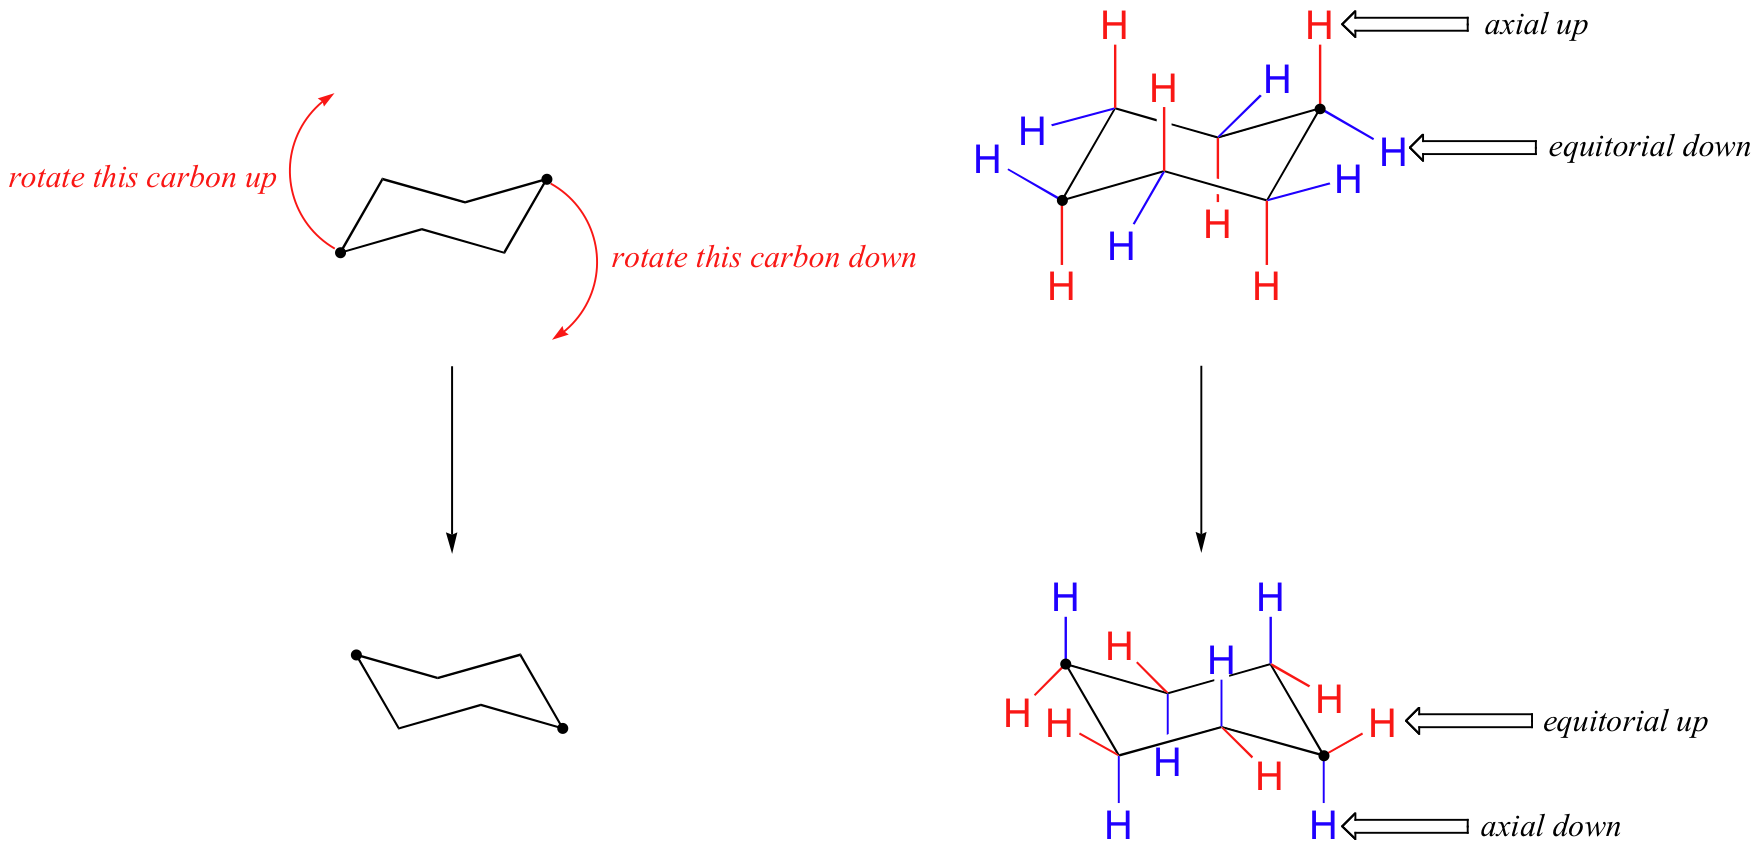 47 Cyclohexane Conformations Chemistry Libretexts